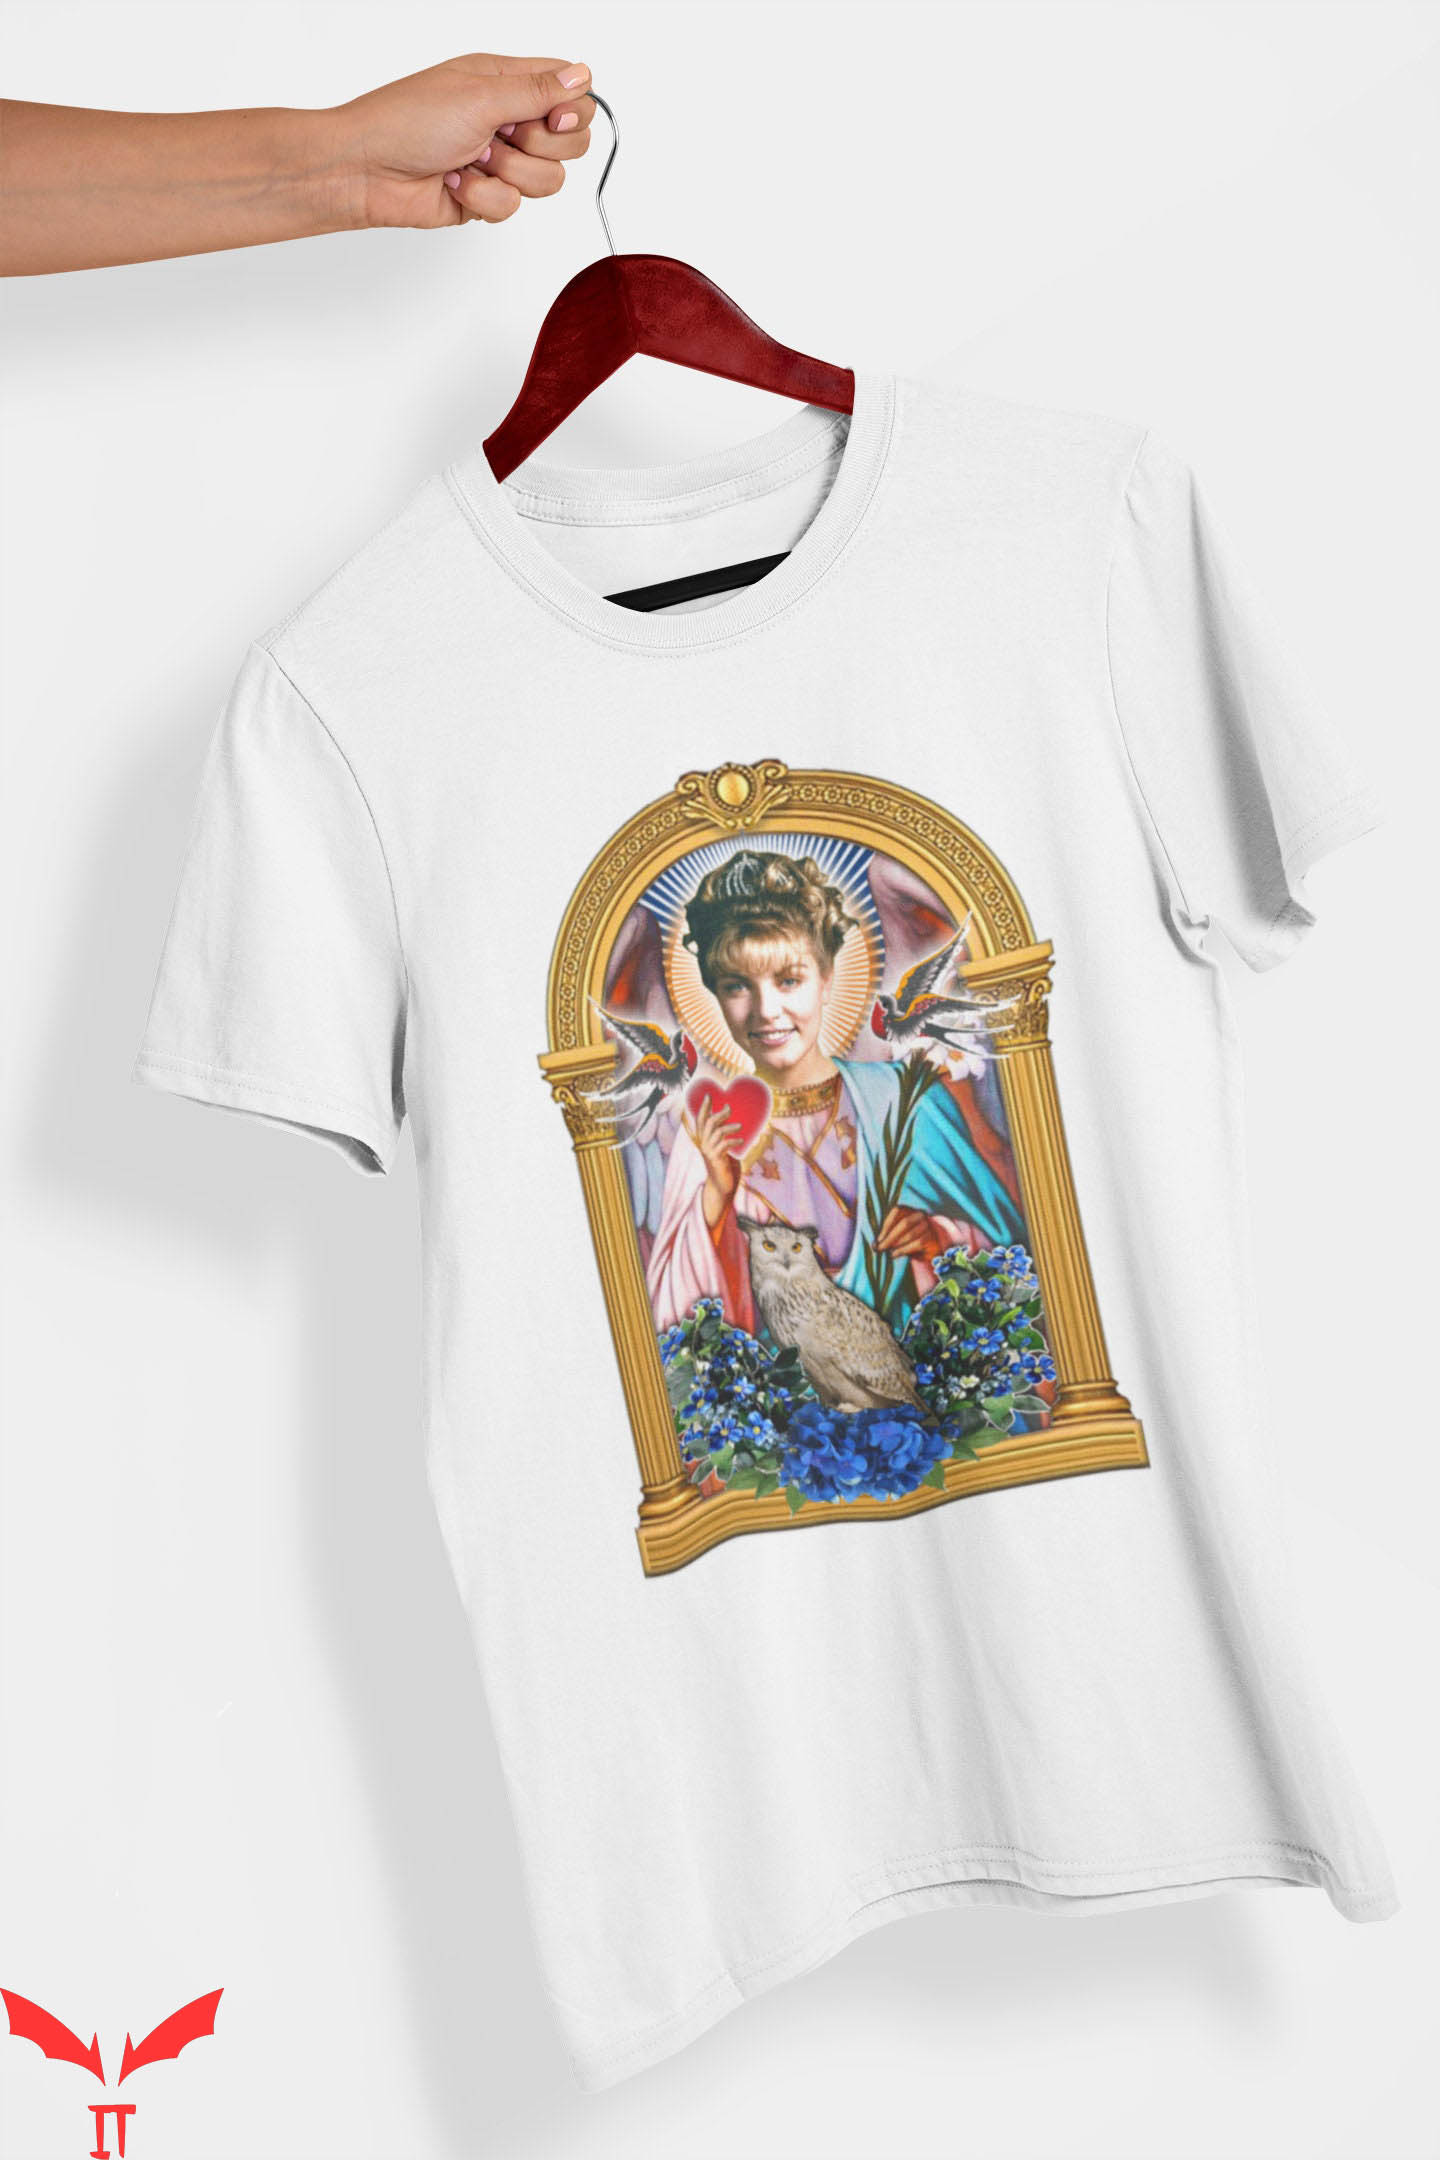 Who Drink Arnold Palmer T-Shirt Saint Laura Palmer Shirt